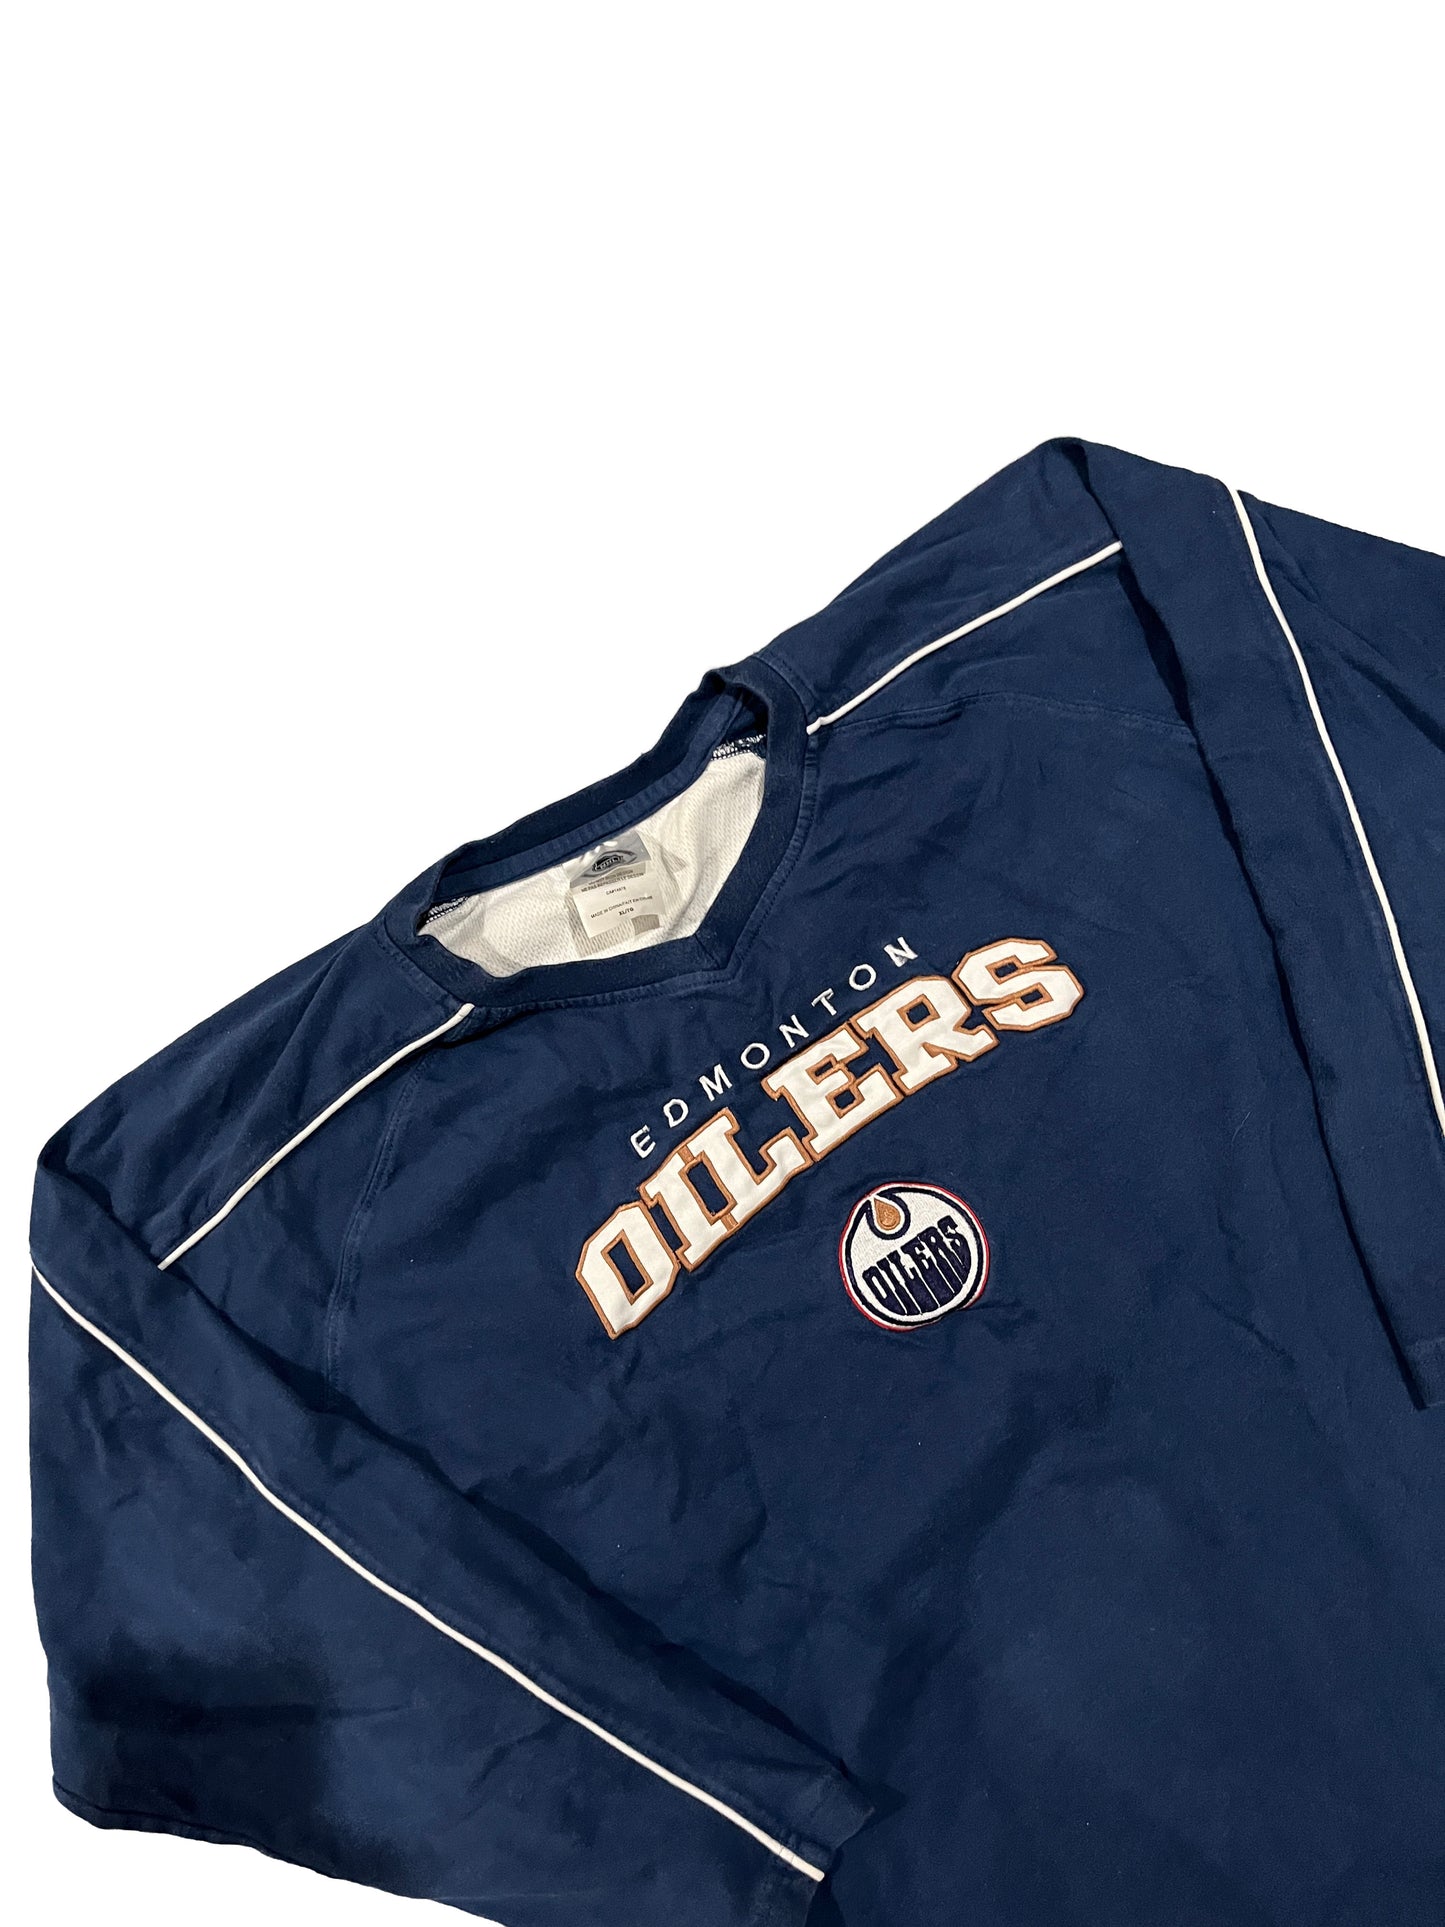 Vintage Edmonton Oilers Sweater